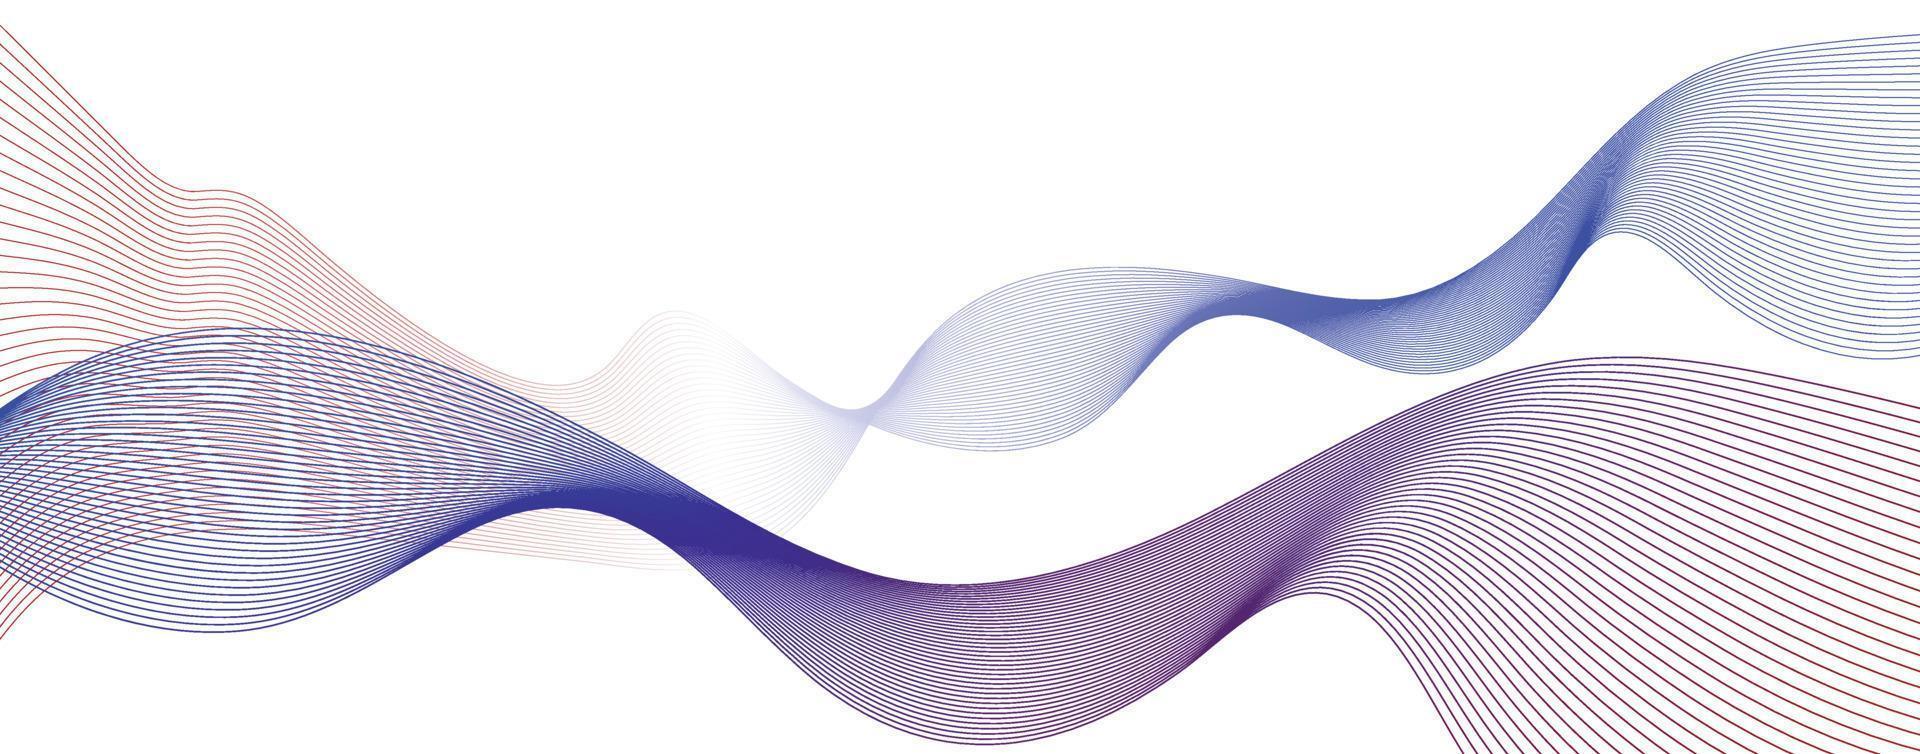 wave design background